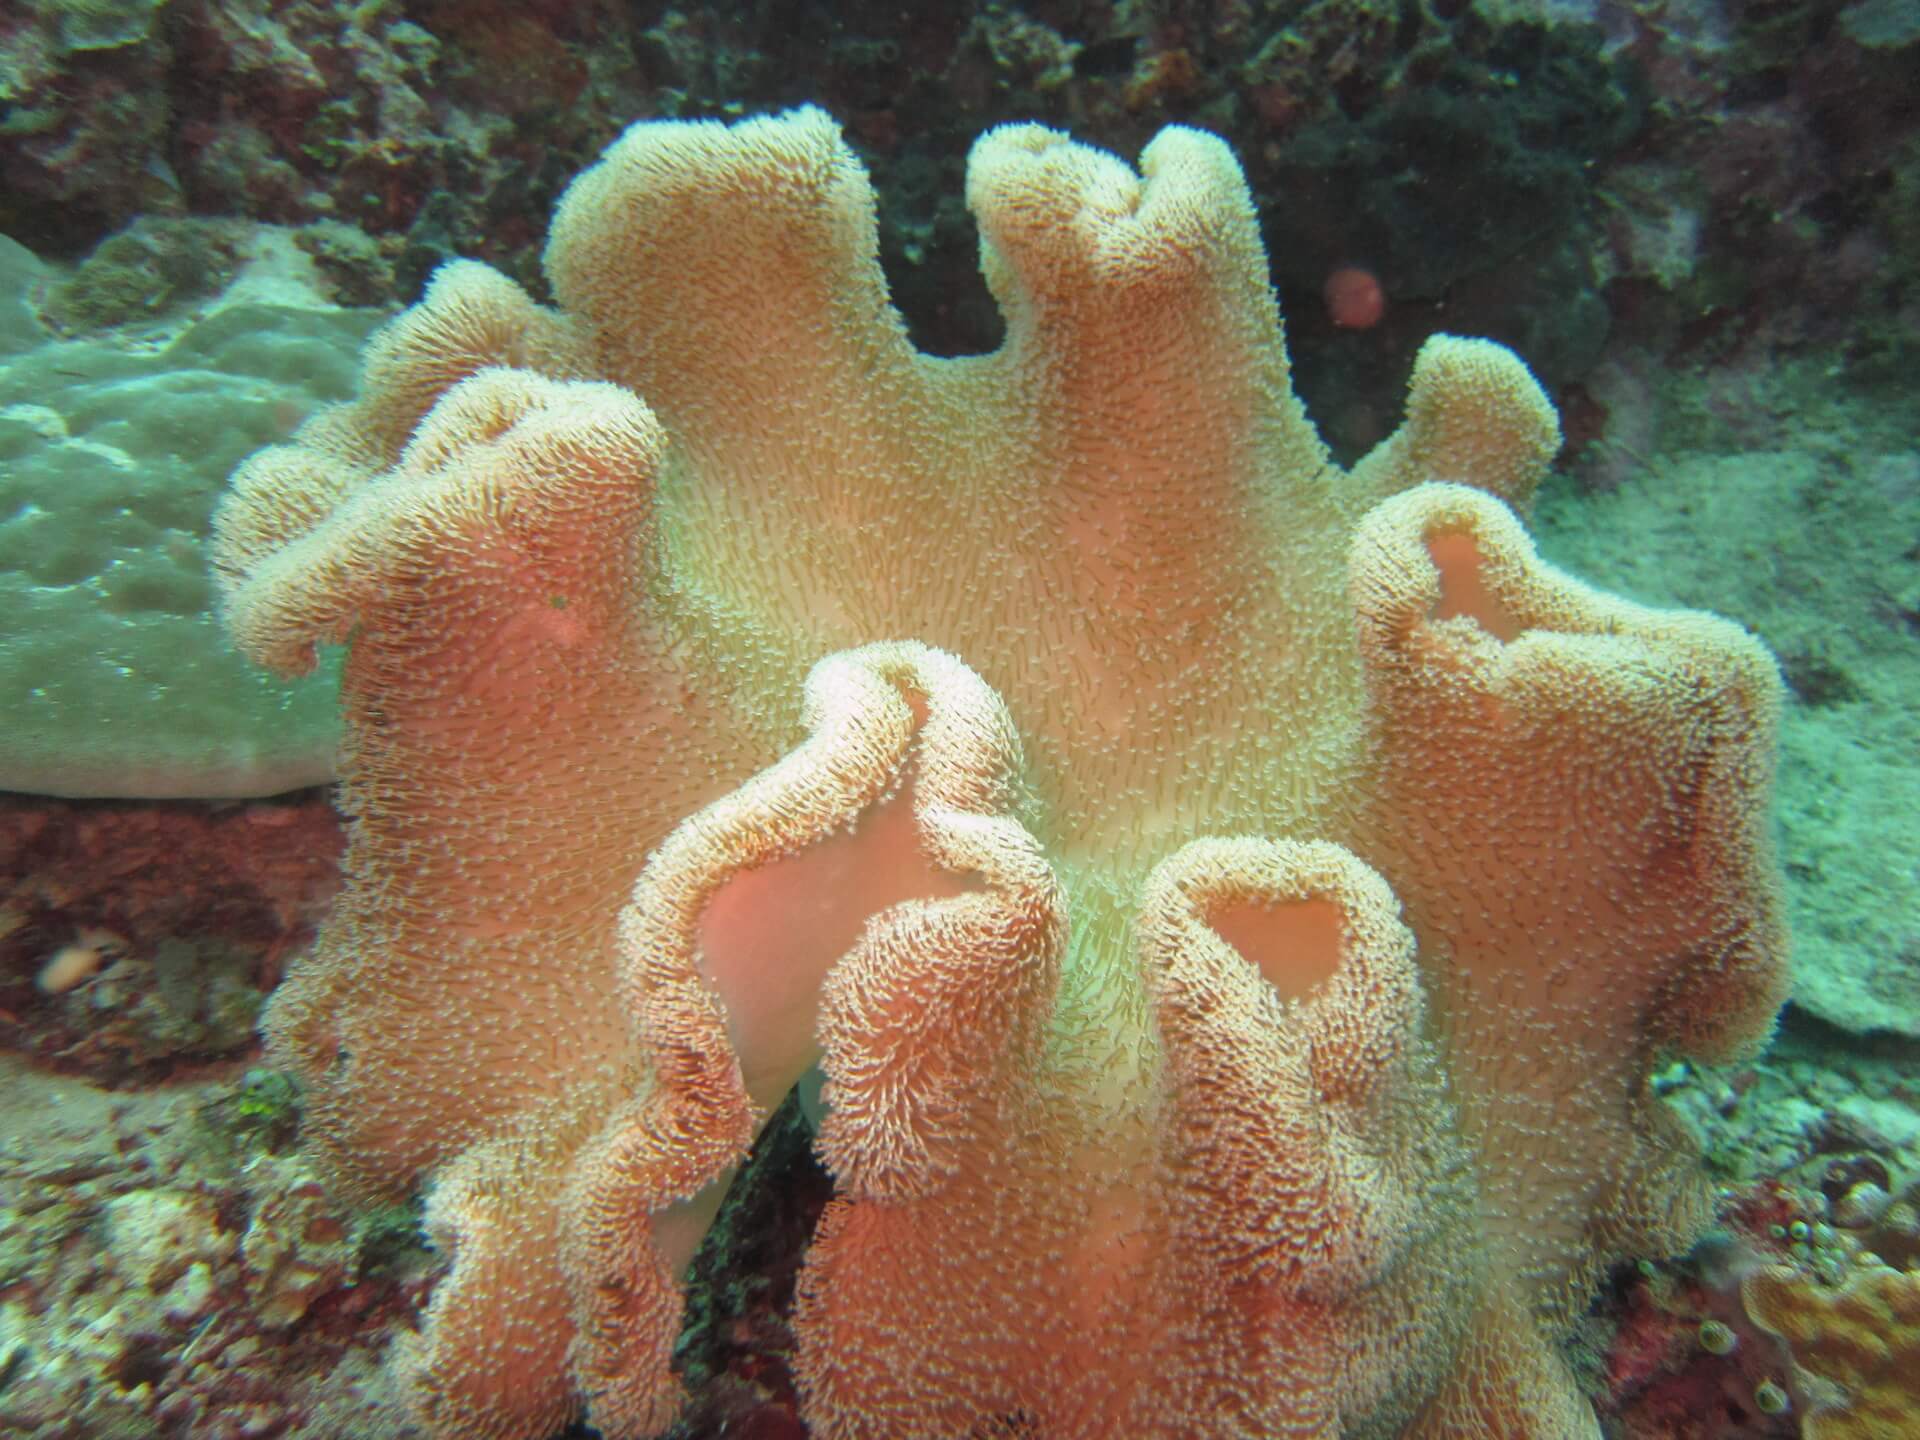 Bunaken Island, Manado, Indonesia - Soft coral 1